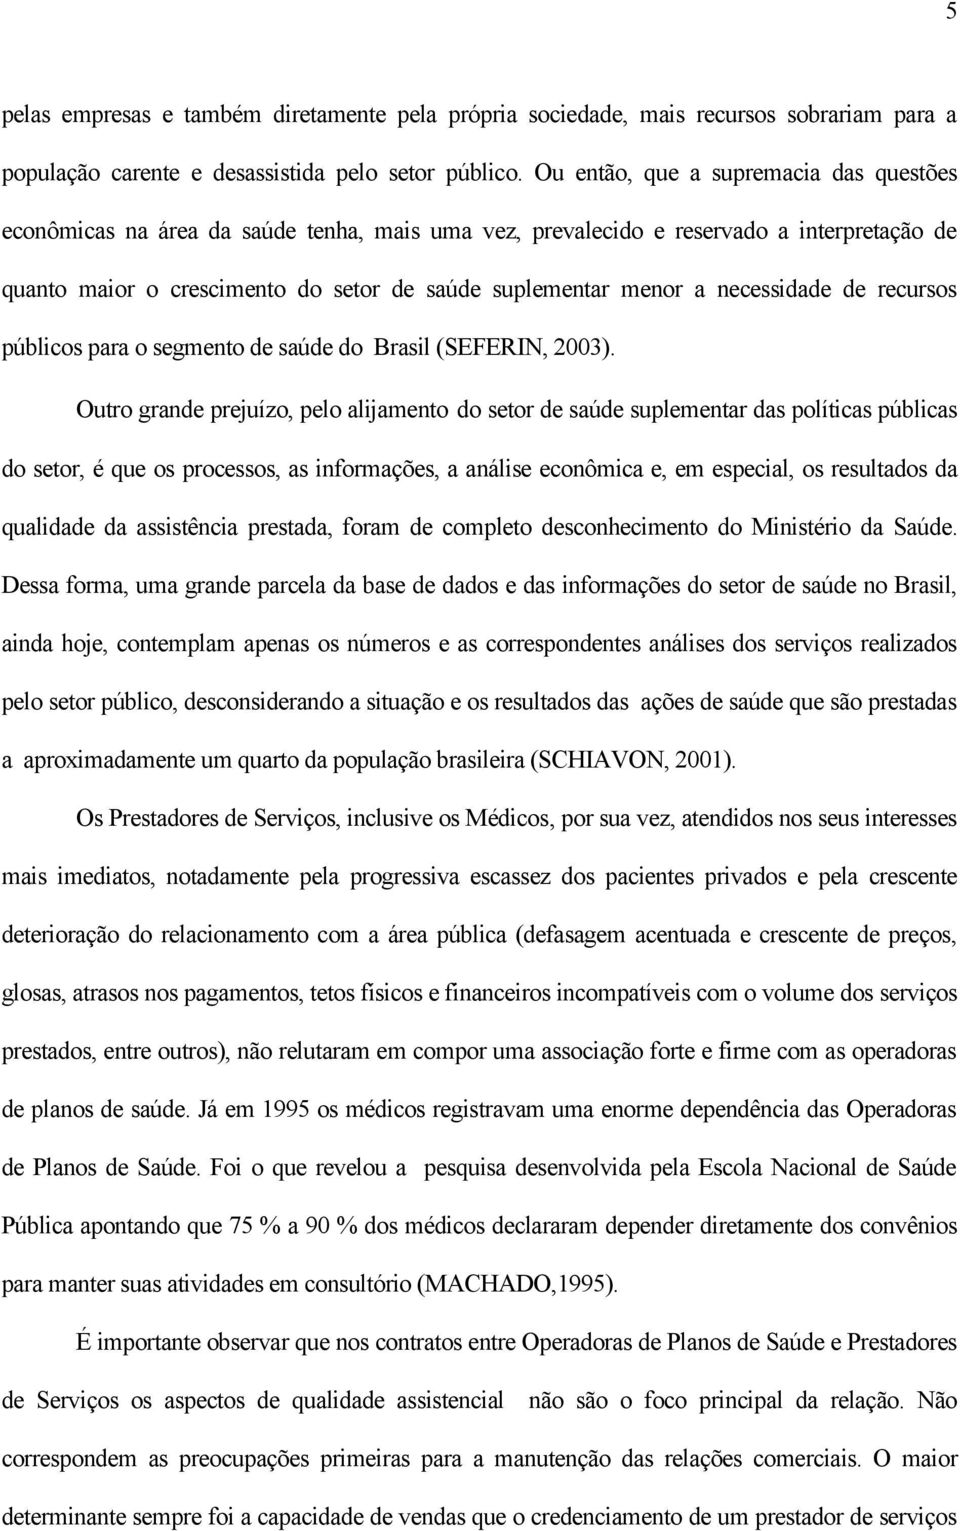 necessidade de recursos públicos para o segmento de saúde do Brasil (SEFERIN, 2003).